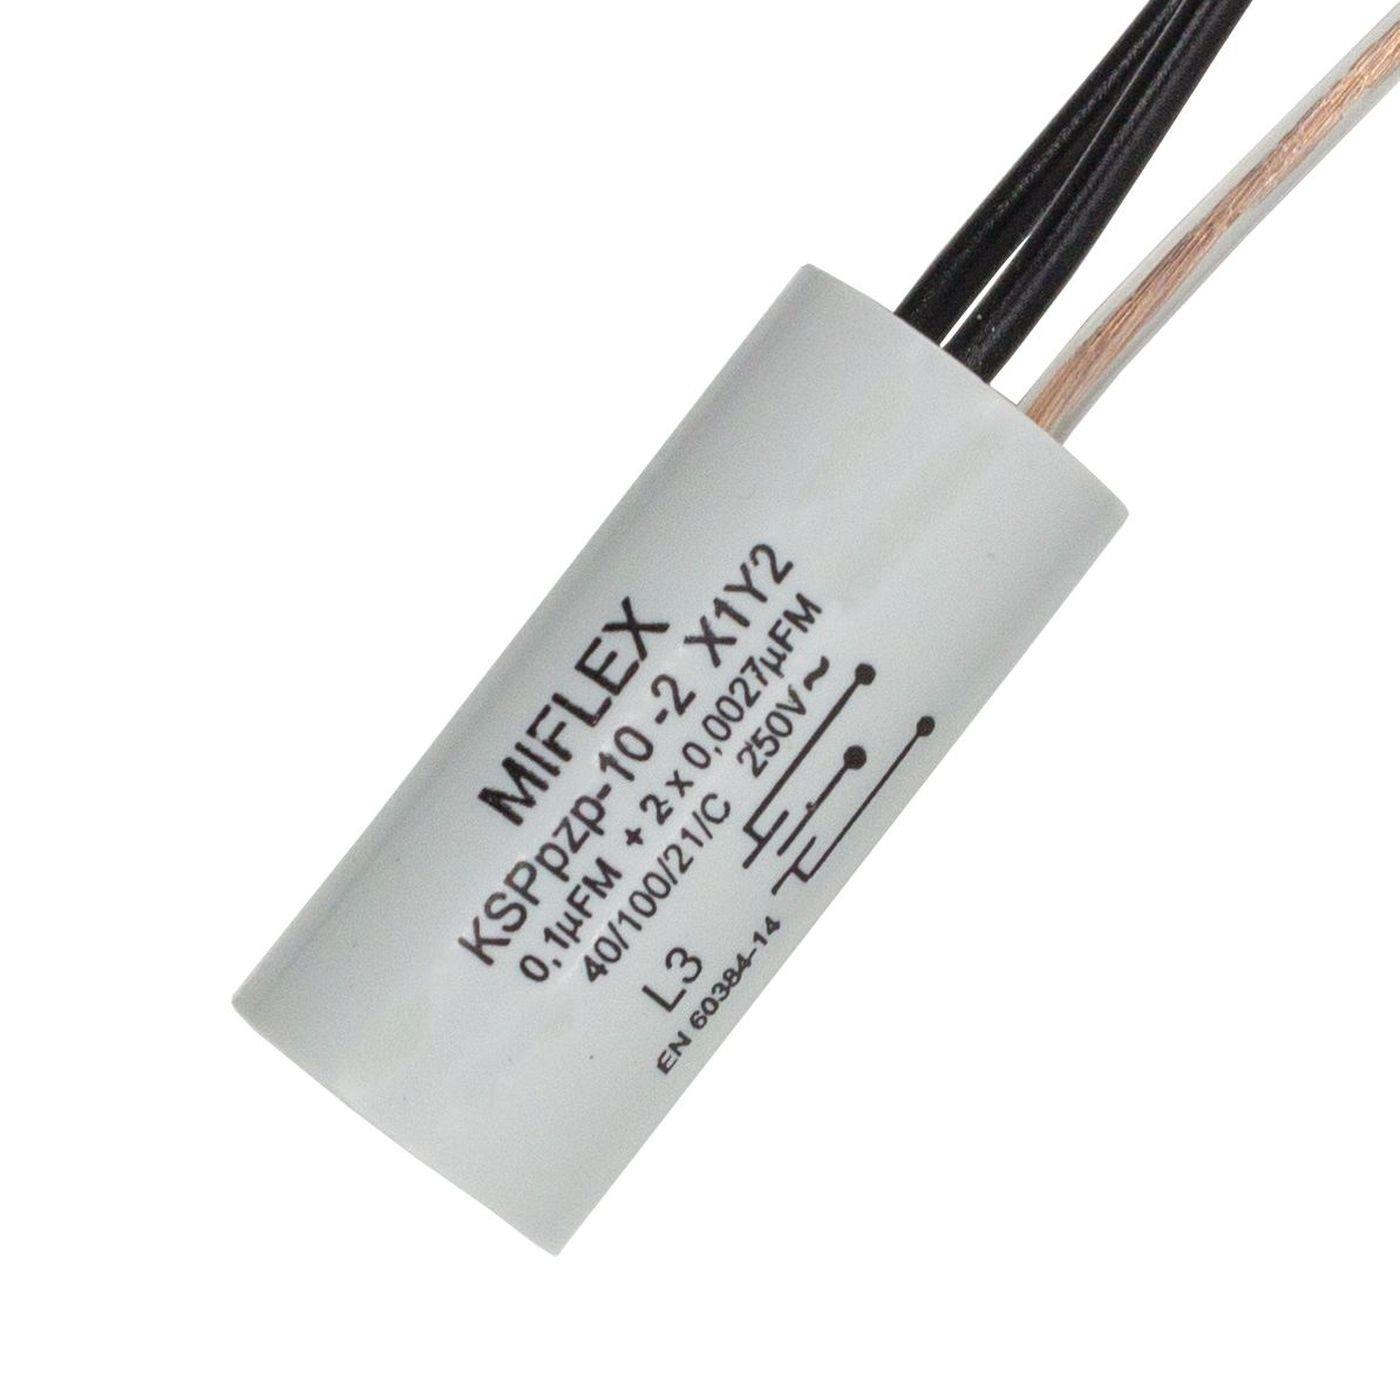 Entstör Kondensator Radial 1x 0,1µF + 2x 0,0027µF (2,7nF) 250V 15x35mm